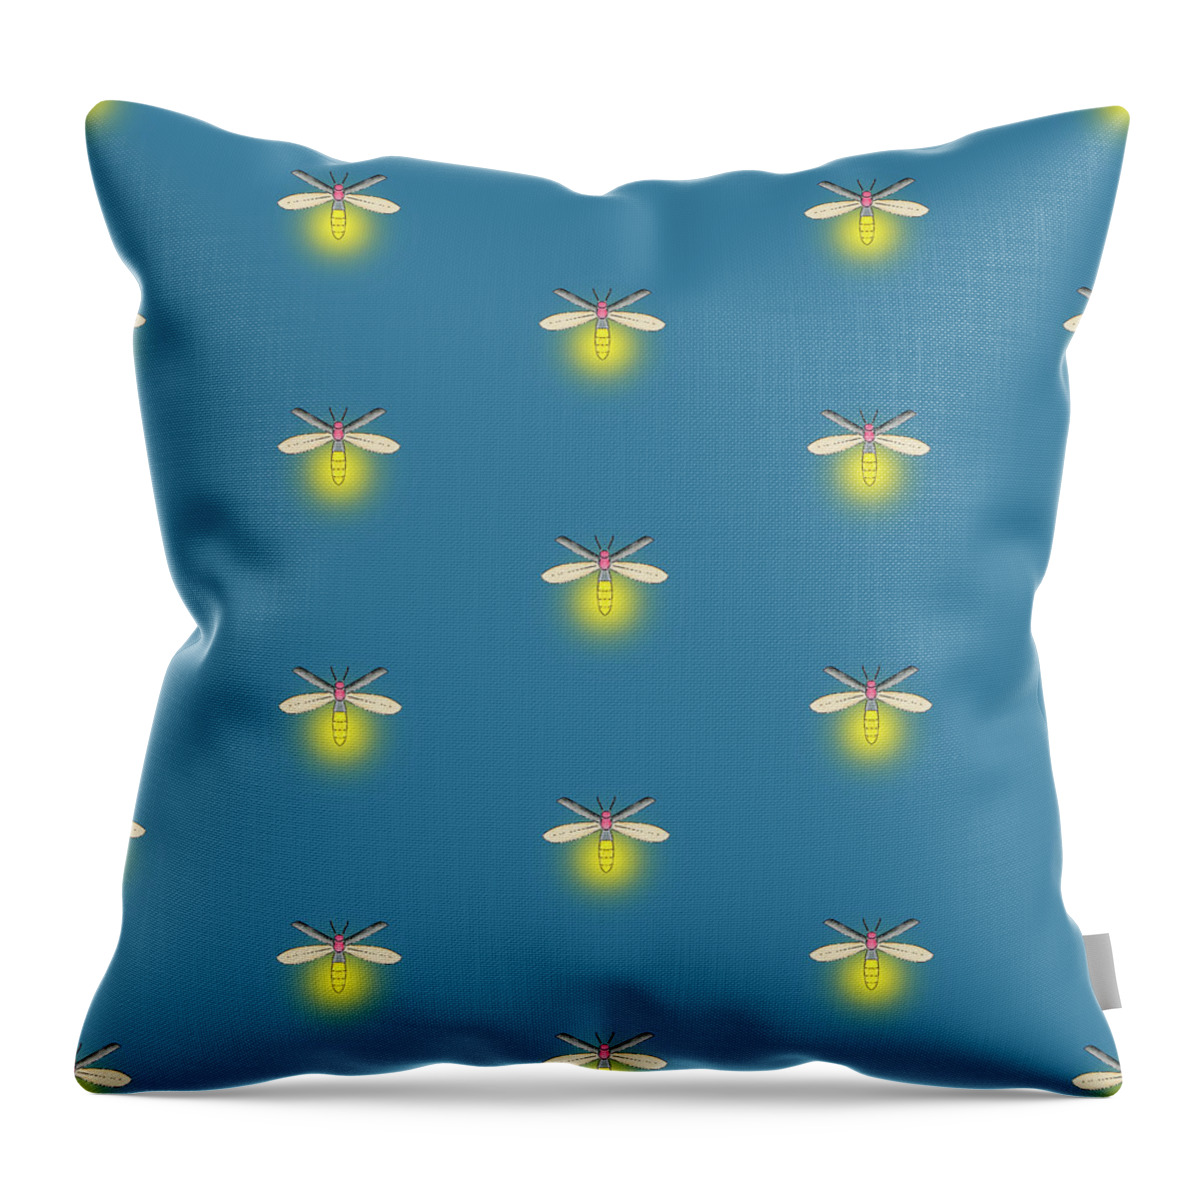 Firefly Throw Pillow featuring the digital art Firefly Pattern by Hugo Edwins